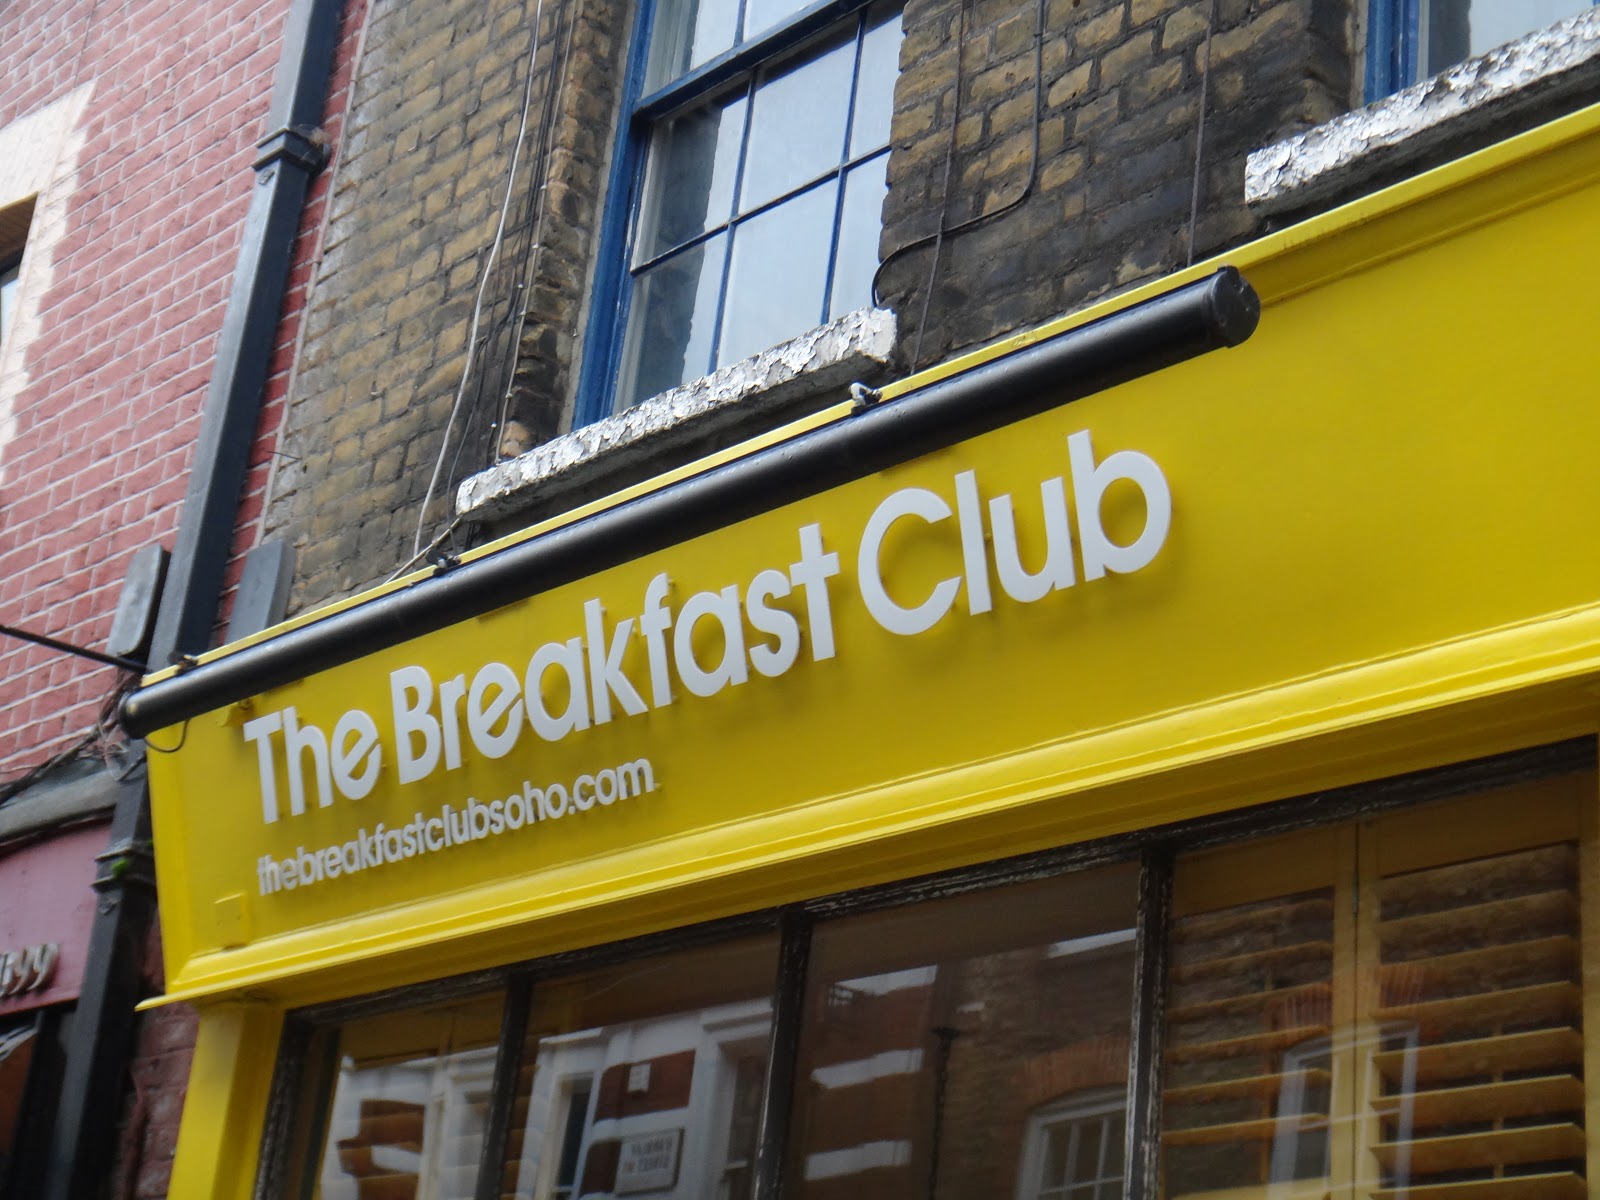 Can't Walk In High Heels: The Breakfast Club